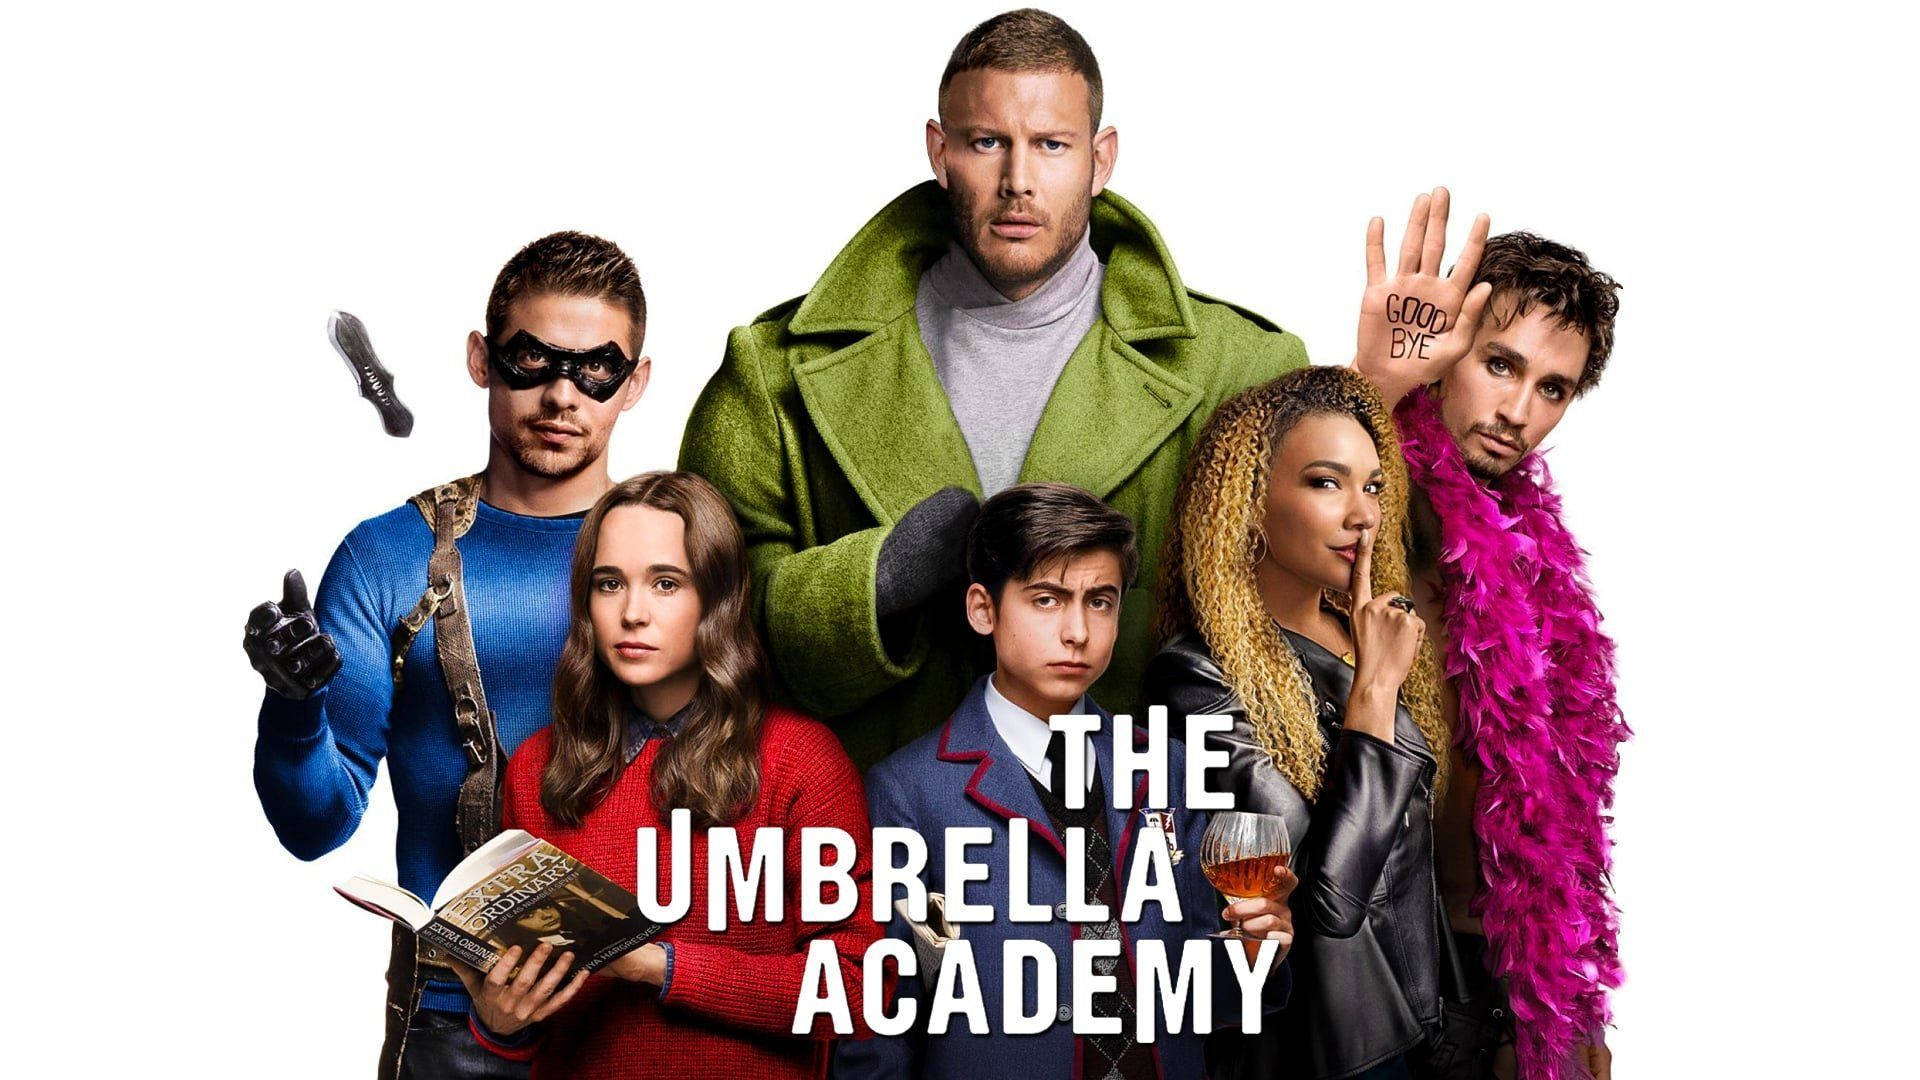 The Umbrella Academy - United Together Background